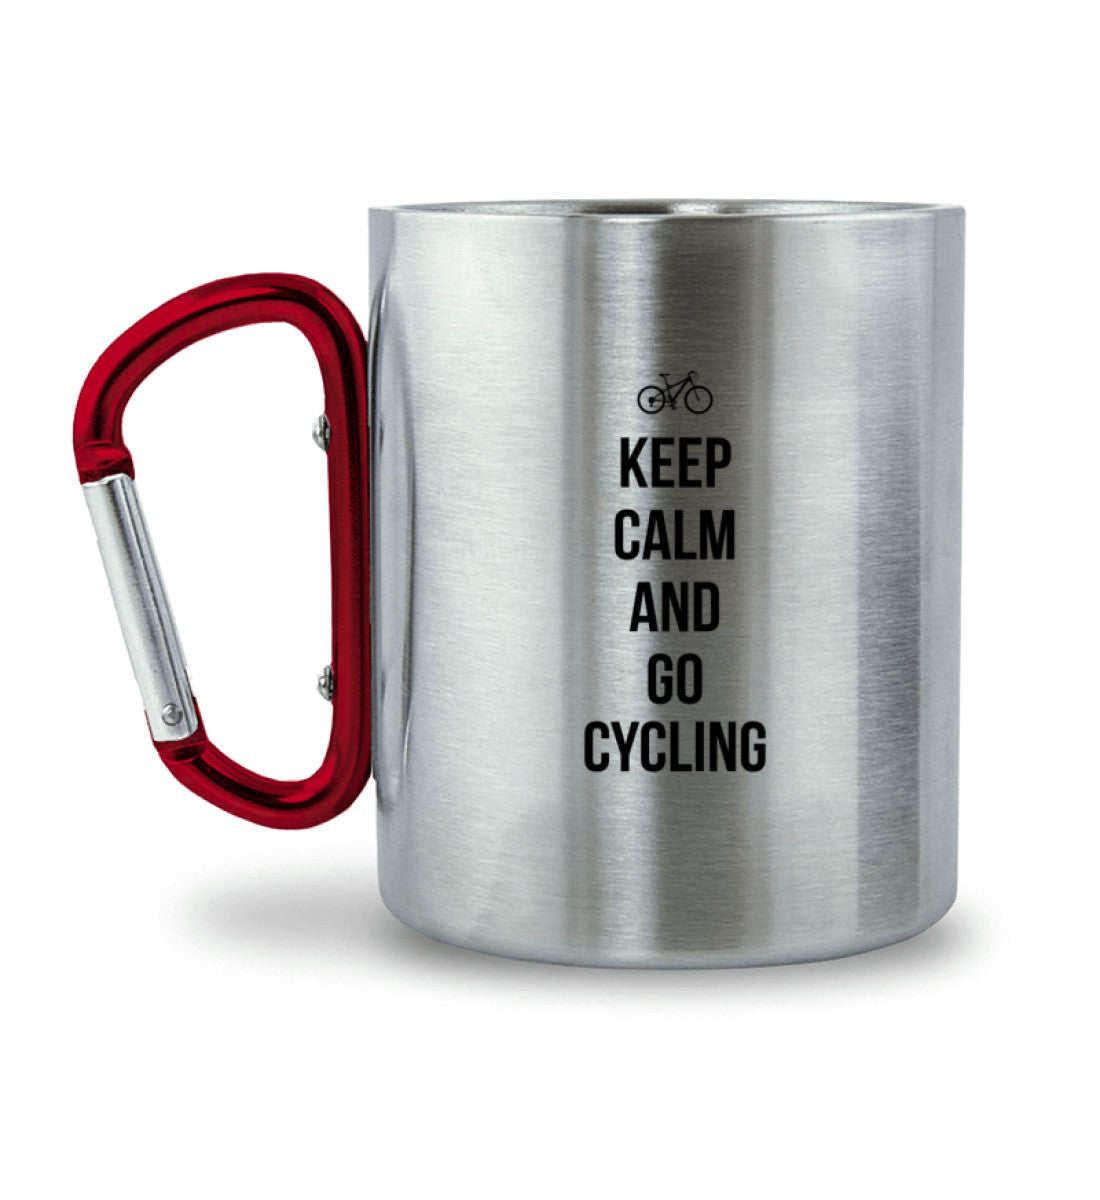 Keep calm and go cycling - Karabiner Tasse fahrrad